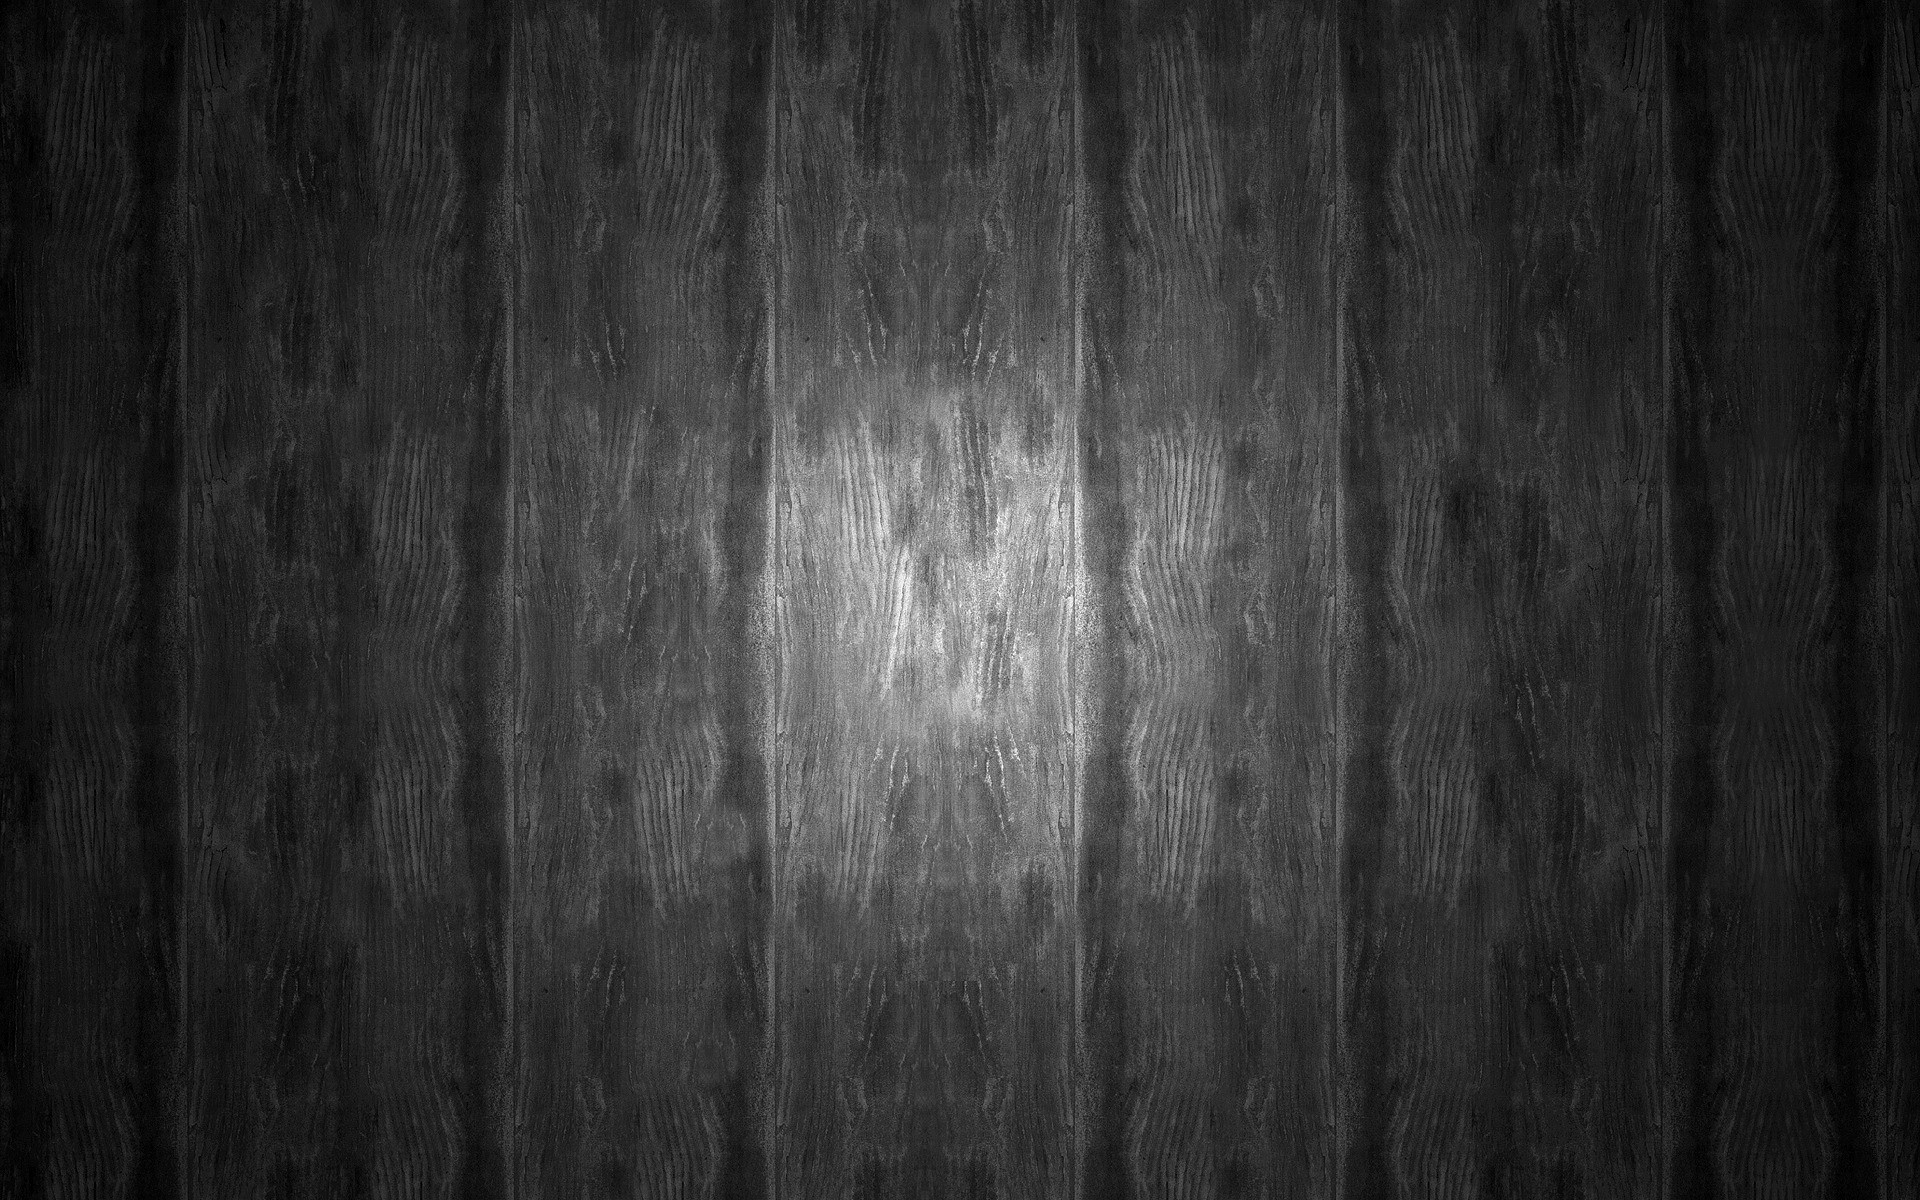 minimalism texture desktop retro abstract dark pattern wallpaper wall design dirty fabric rough background old vintage wood hard panel surface minimal grey